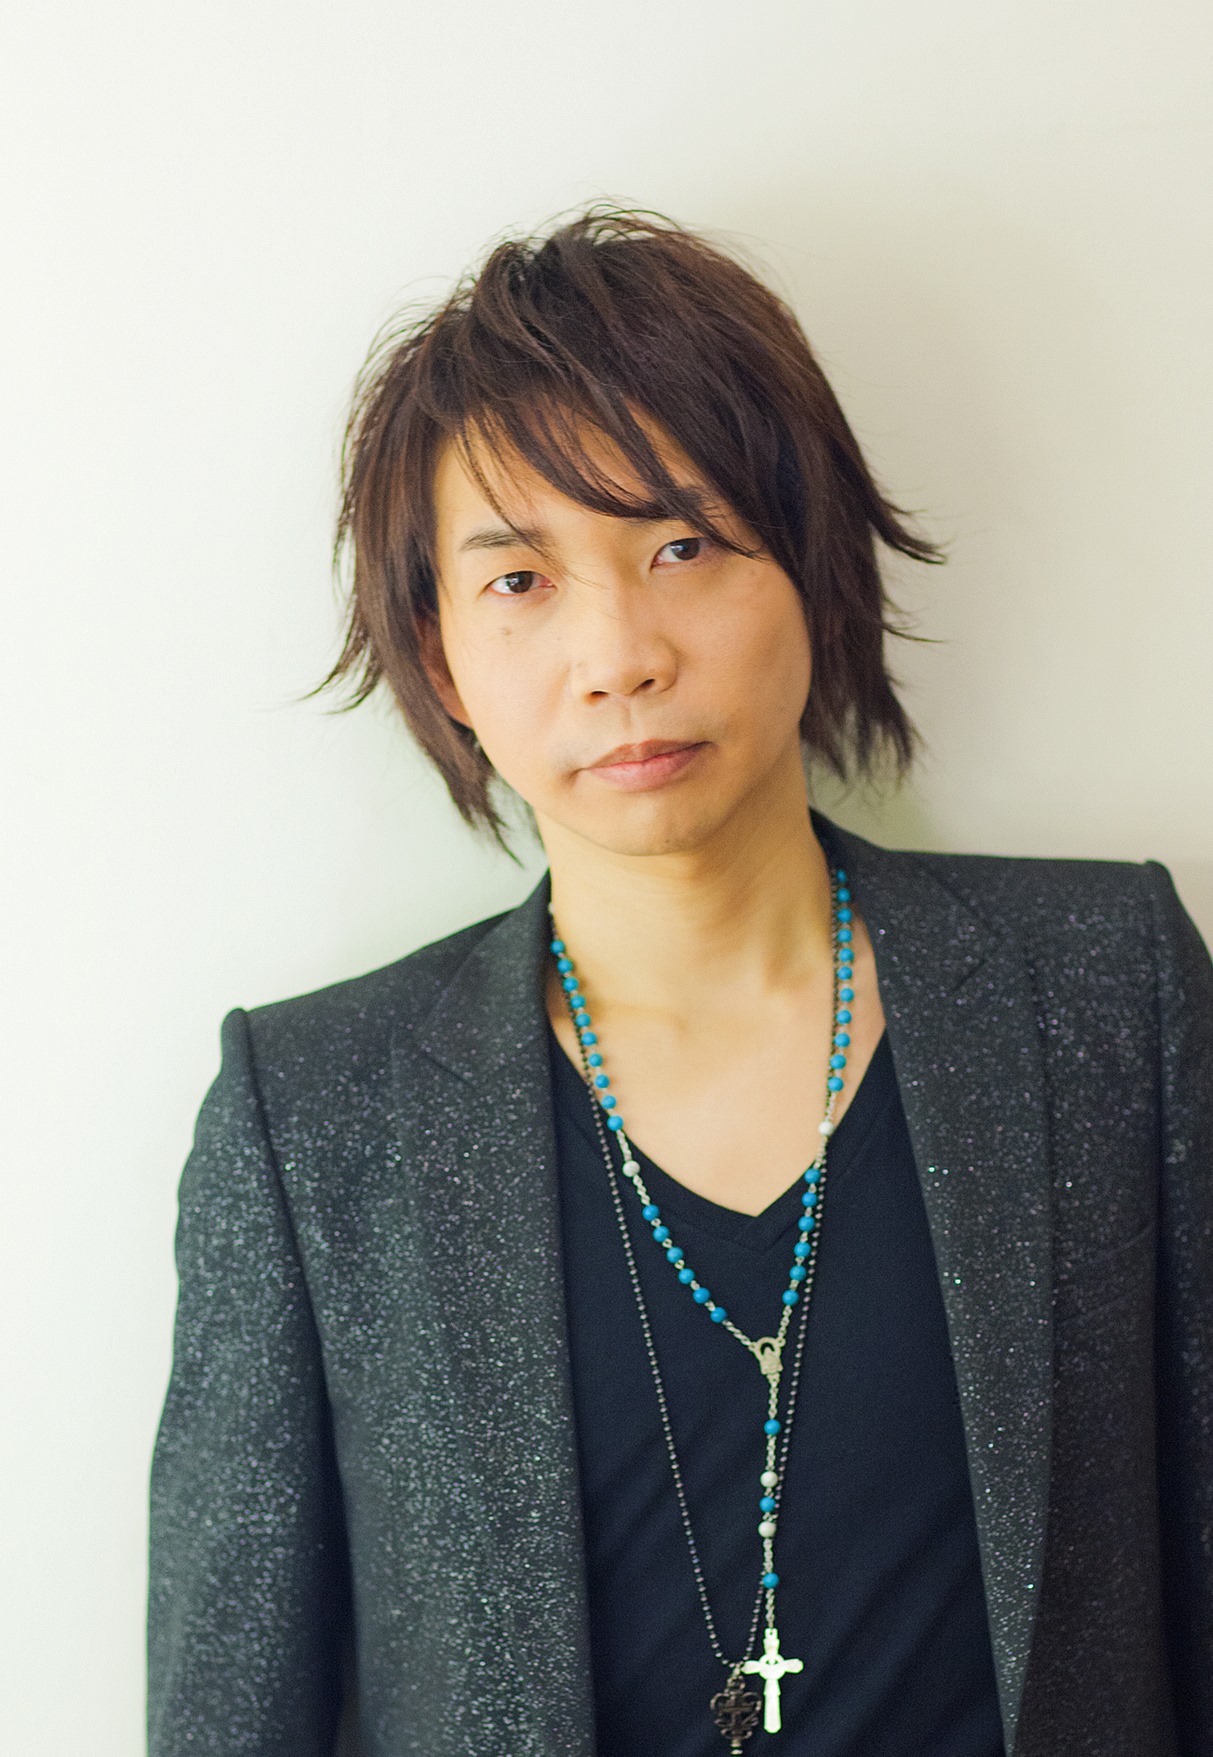 Agency photo of Junichi Suwabe